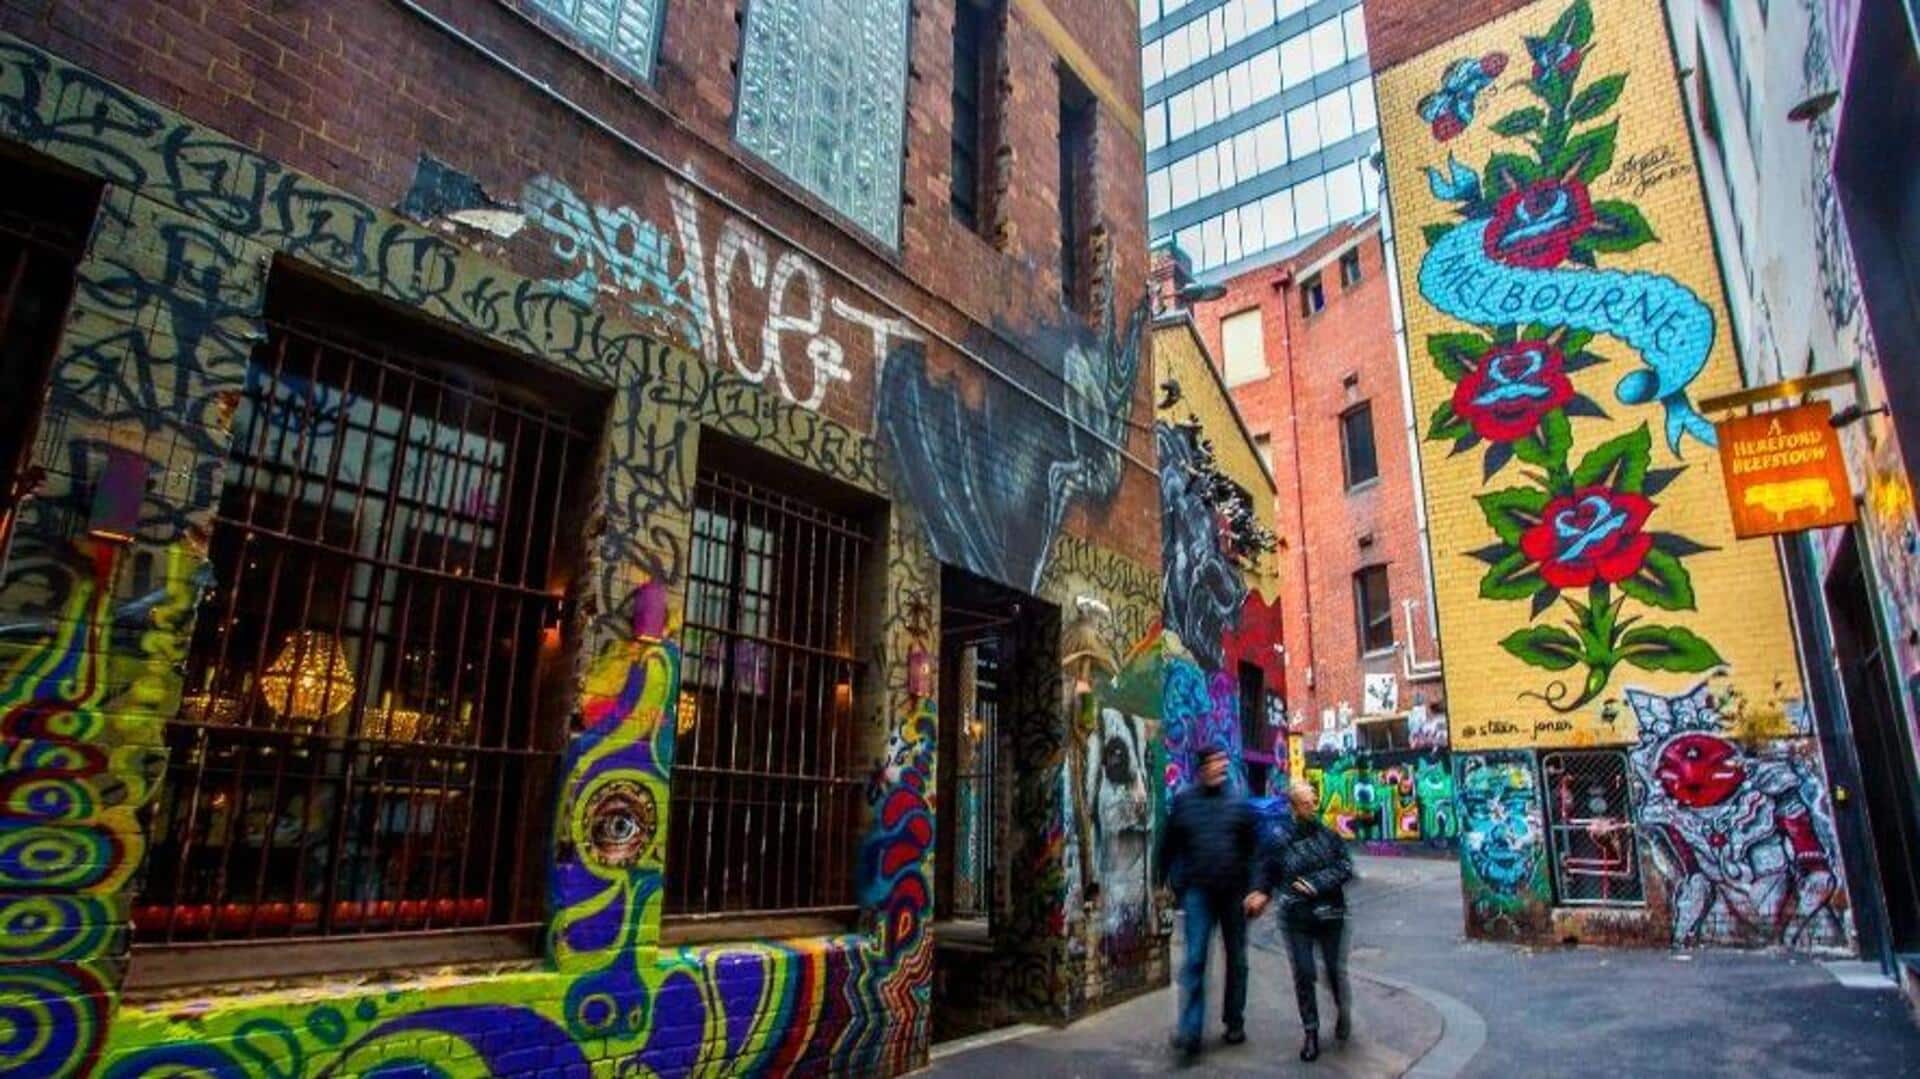 Melbourne's street art scene is worth exploring